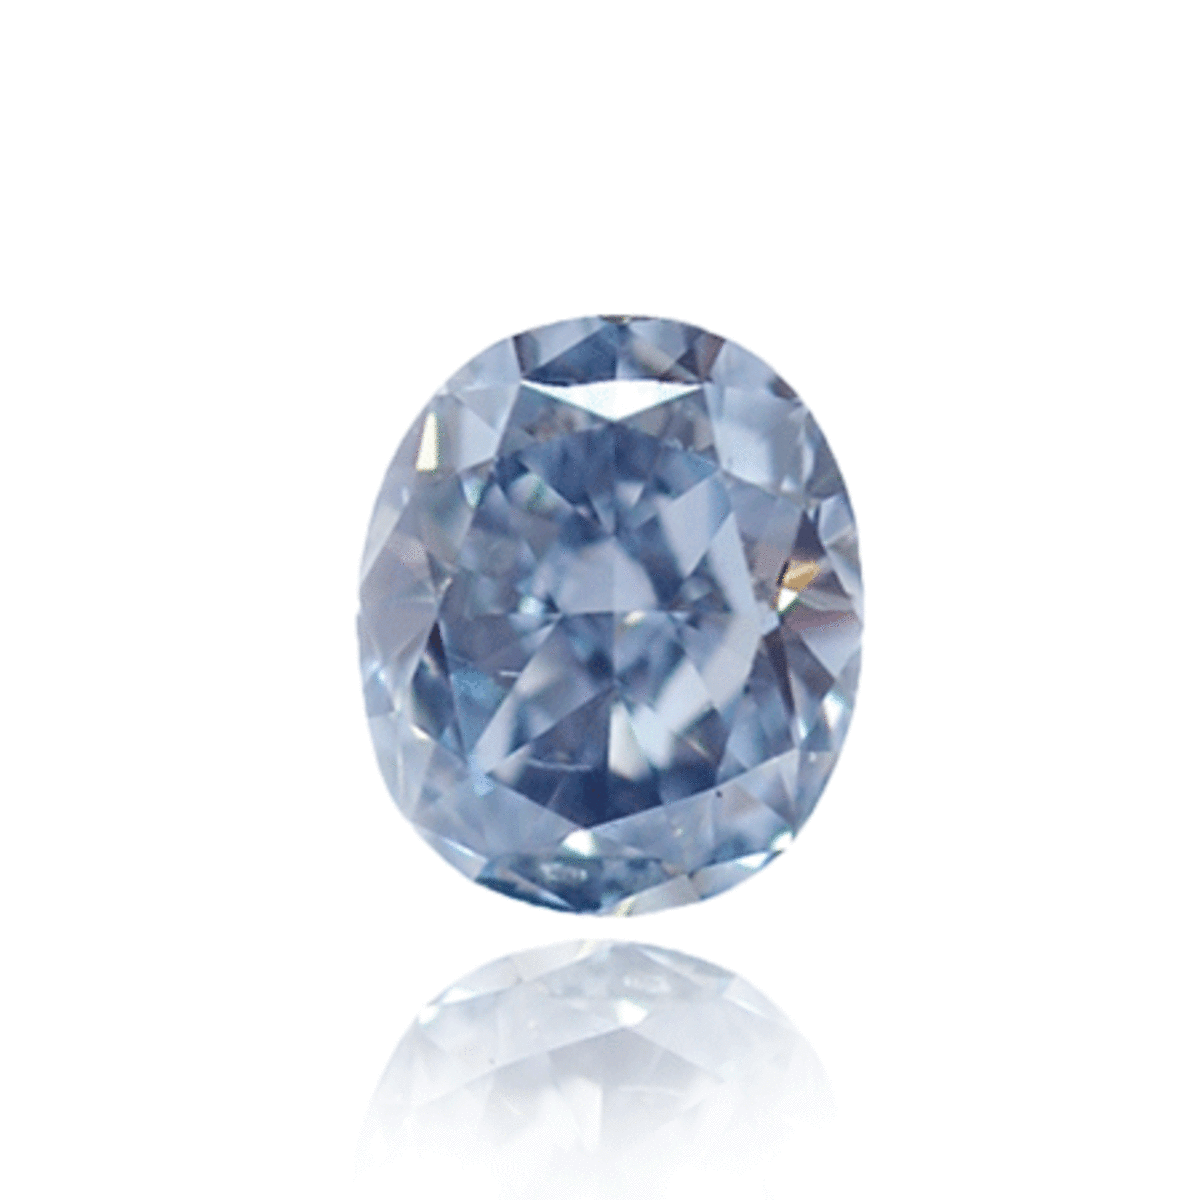 A Fancy Vivid Blue Oval Diamond.